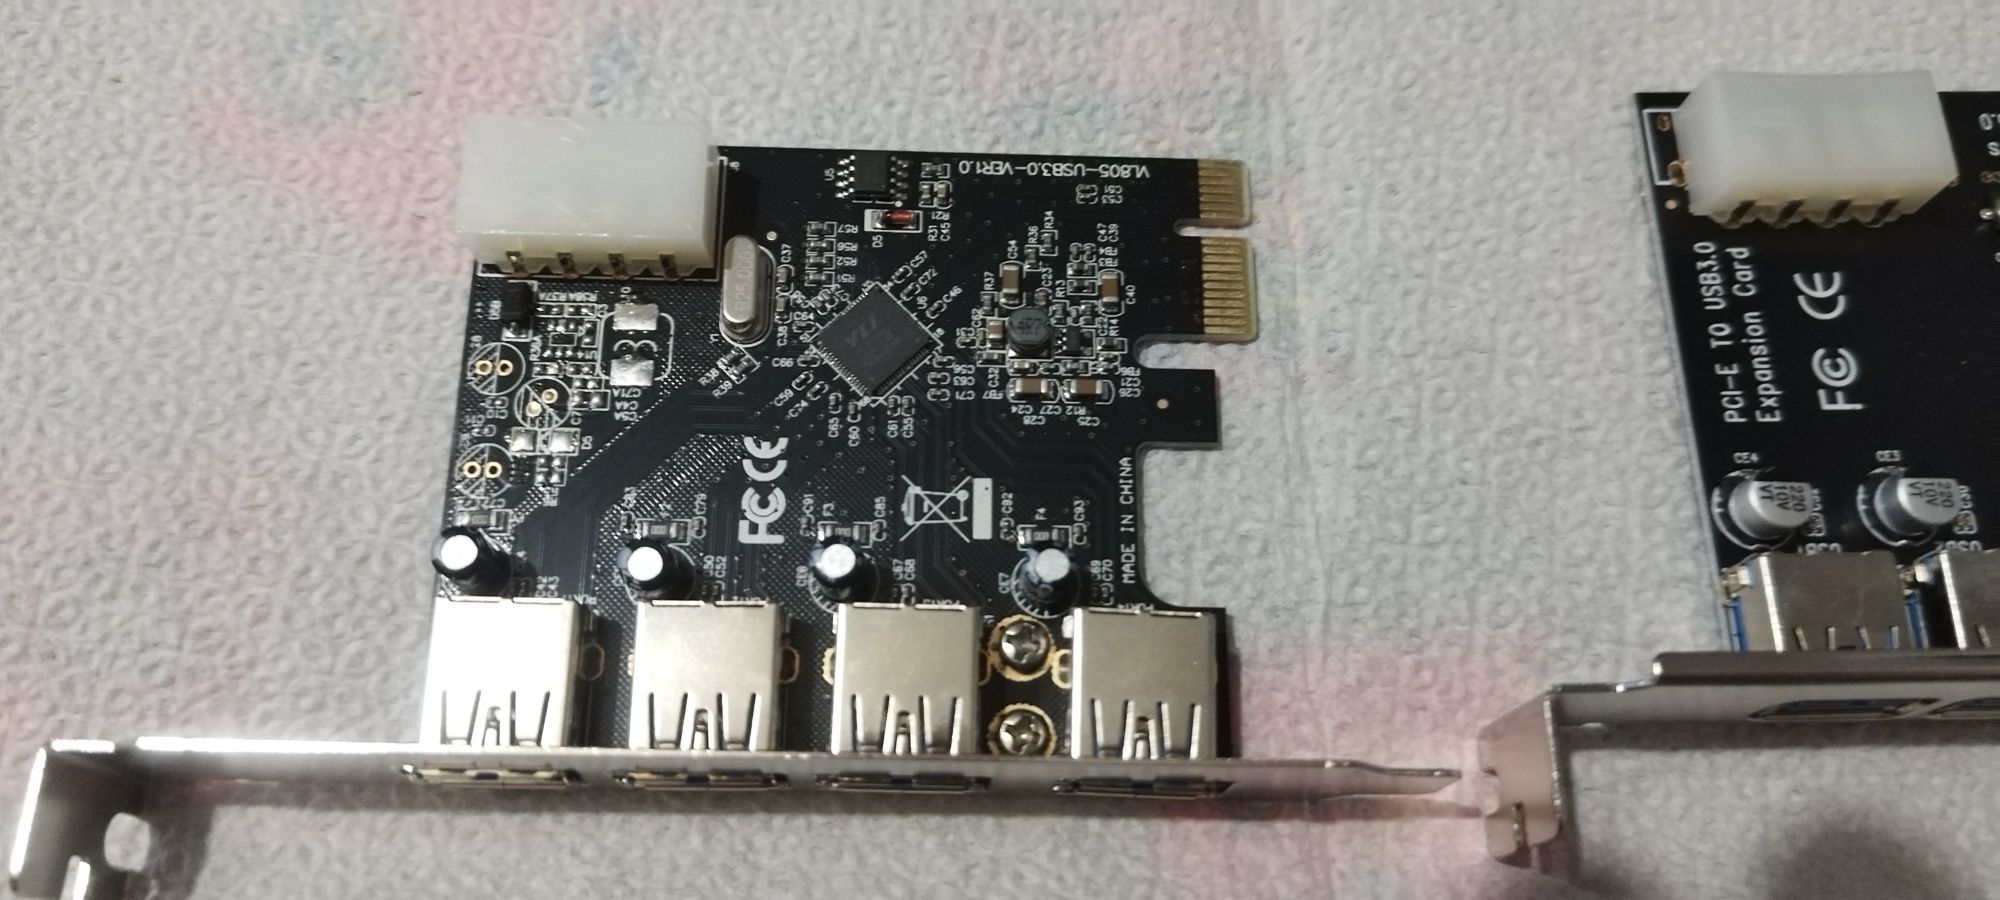 USB 3.0 PCI Express Expansion Card